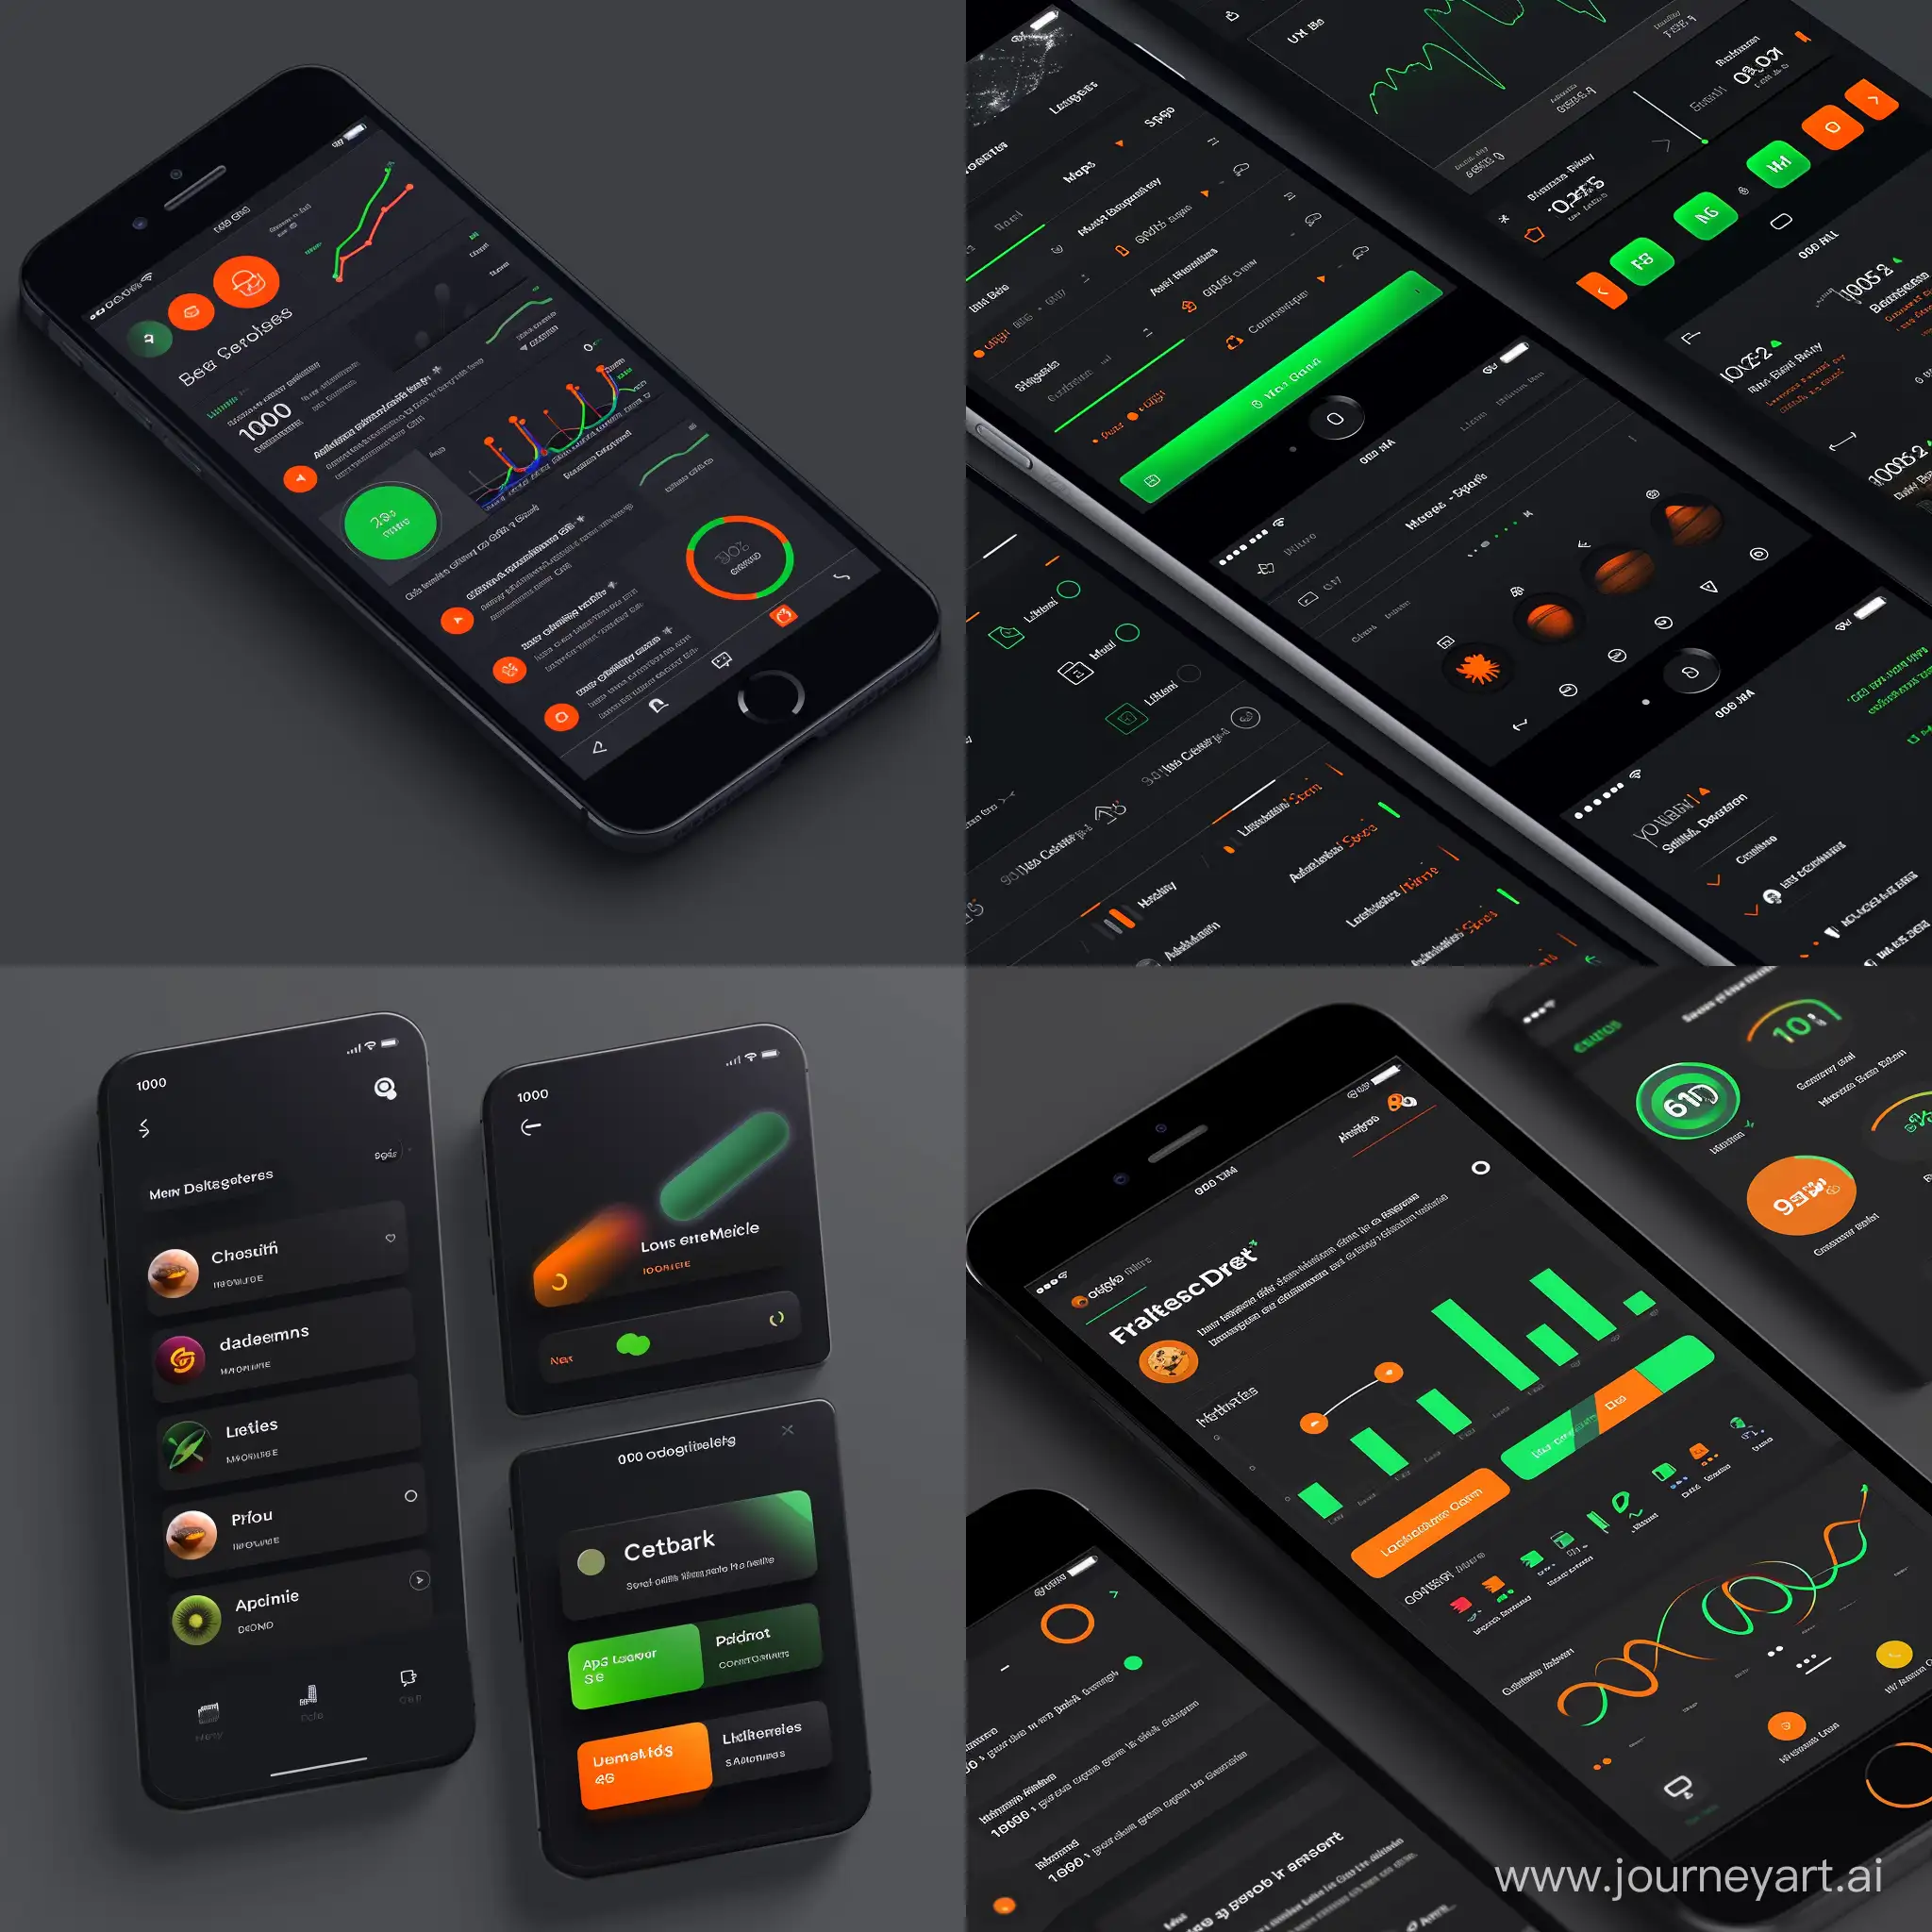 modern ios app ui components list
main color : dark
main accent : green
light accent : orange
-stylized 1000